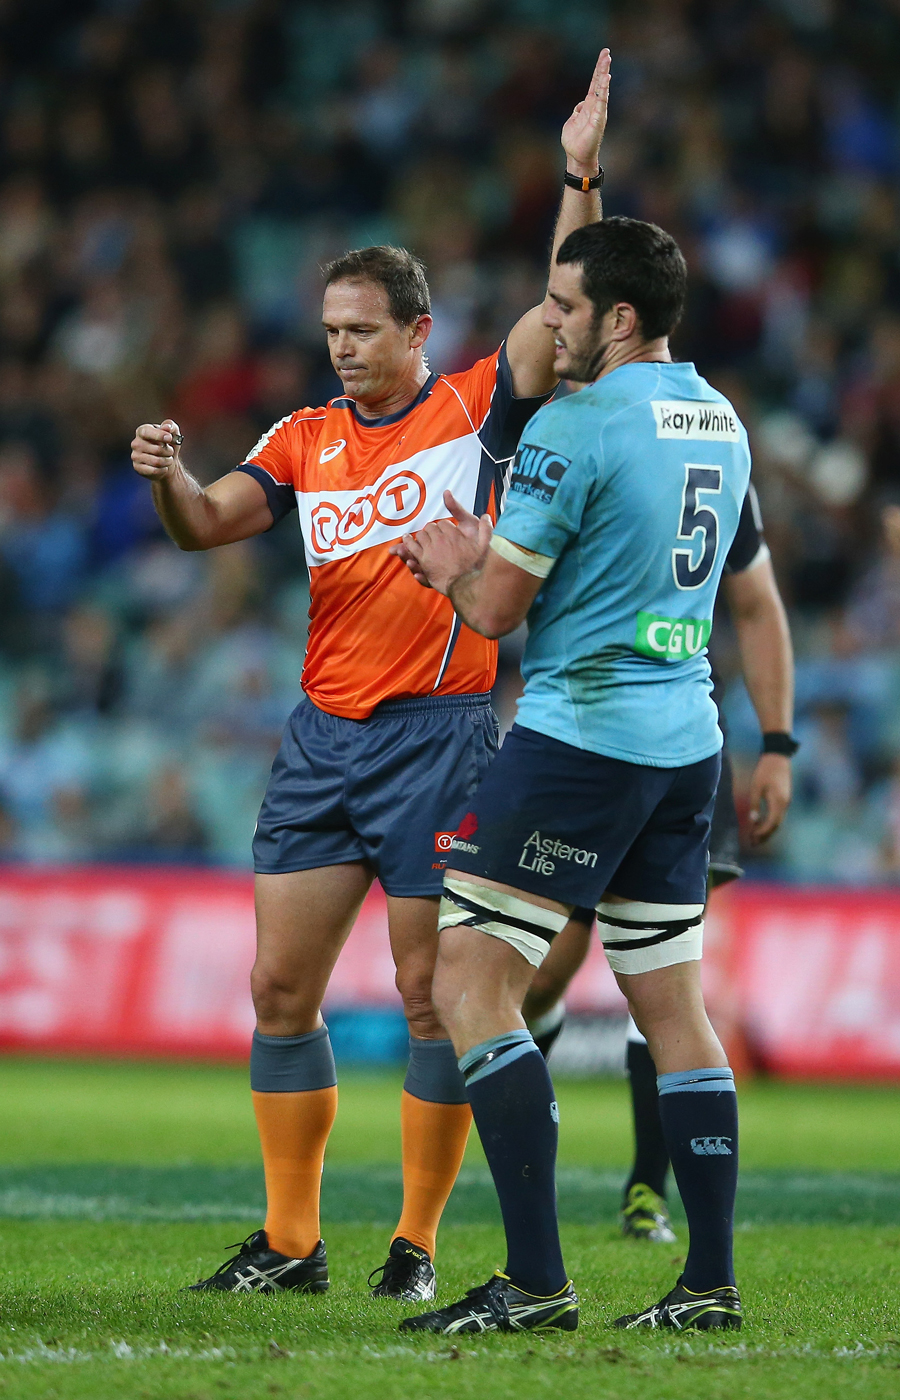 Referee Rohan Hoffmann awards a penalty against the Sharks, Waratahs v Sharks, Super Rugby, Allianz Stadium, Sydney, May 16, 2015
